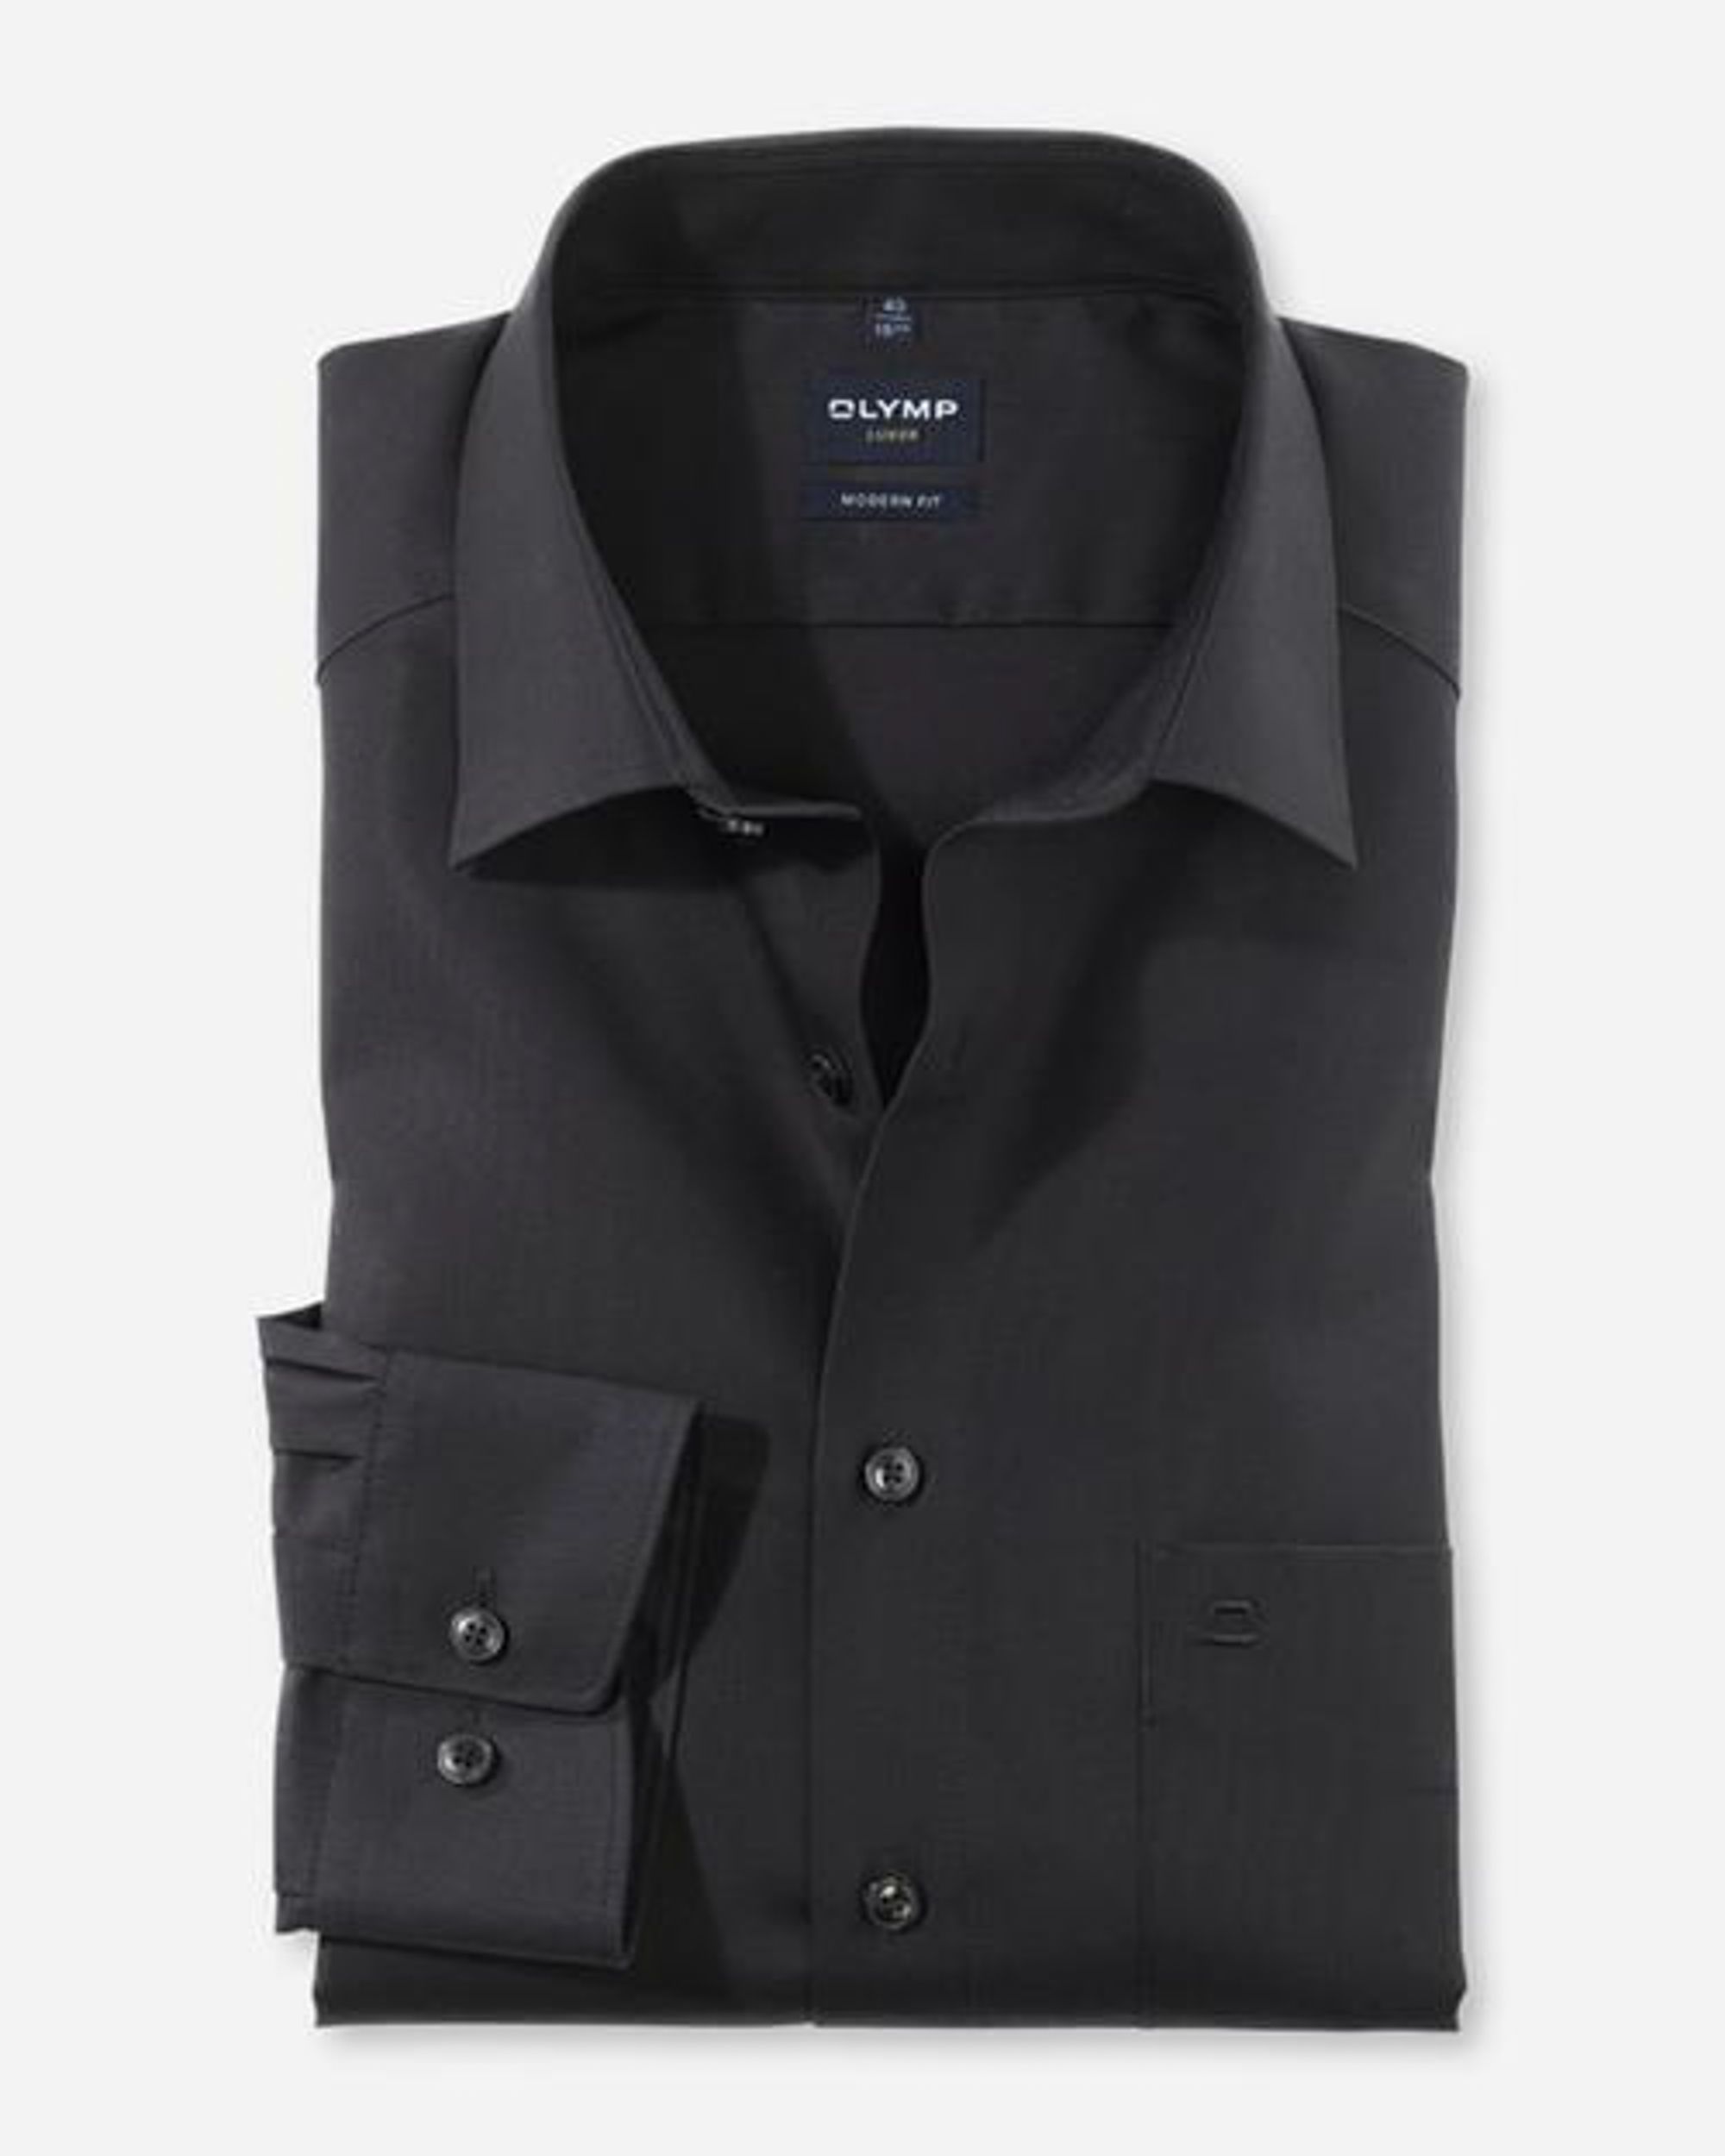 Olymp Luxor Modern Fit Overhemd LM Zwart 011432-10-37